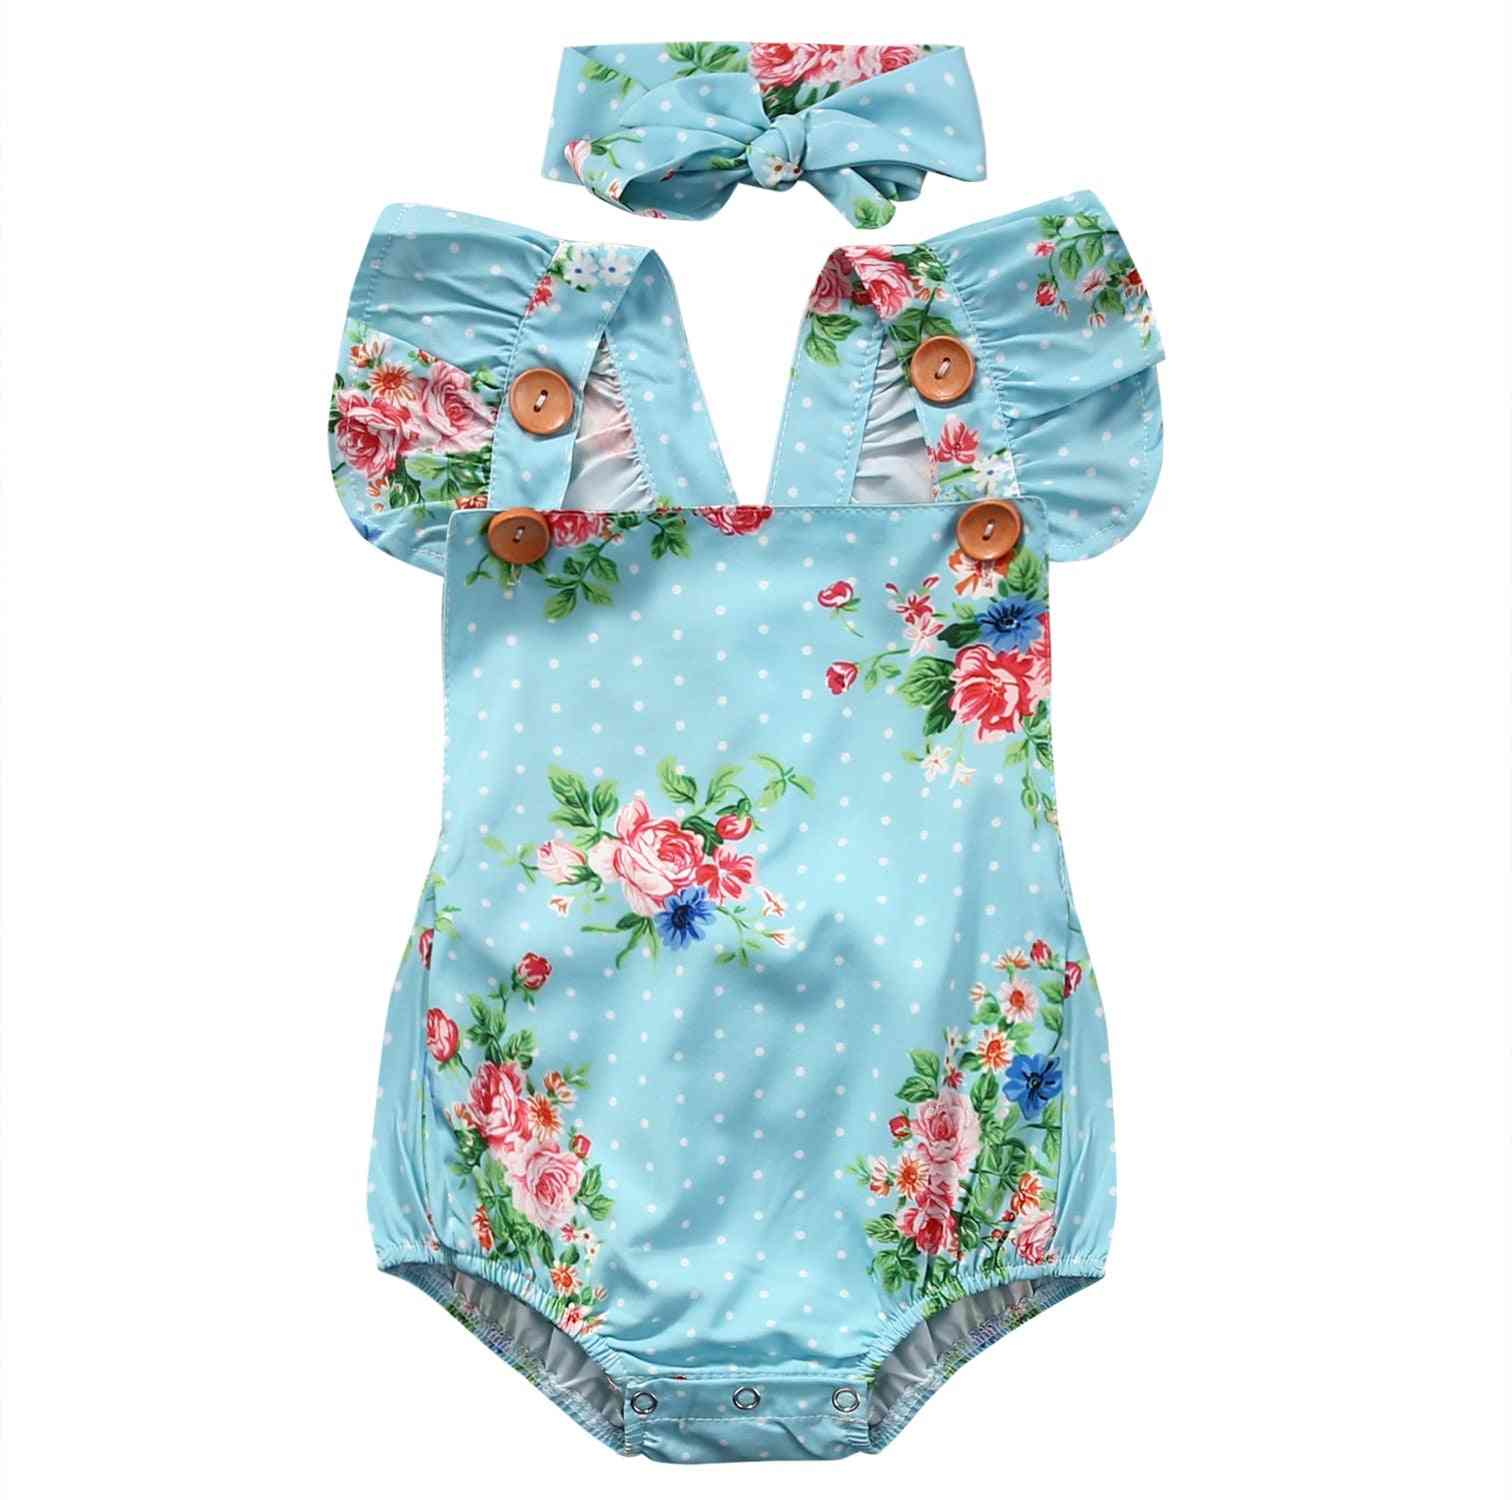 Süße Blumen Strampler Baby Mädchen Overall Strampler + Stirnband Neugeborenen Outfits Set